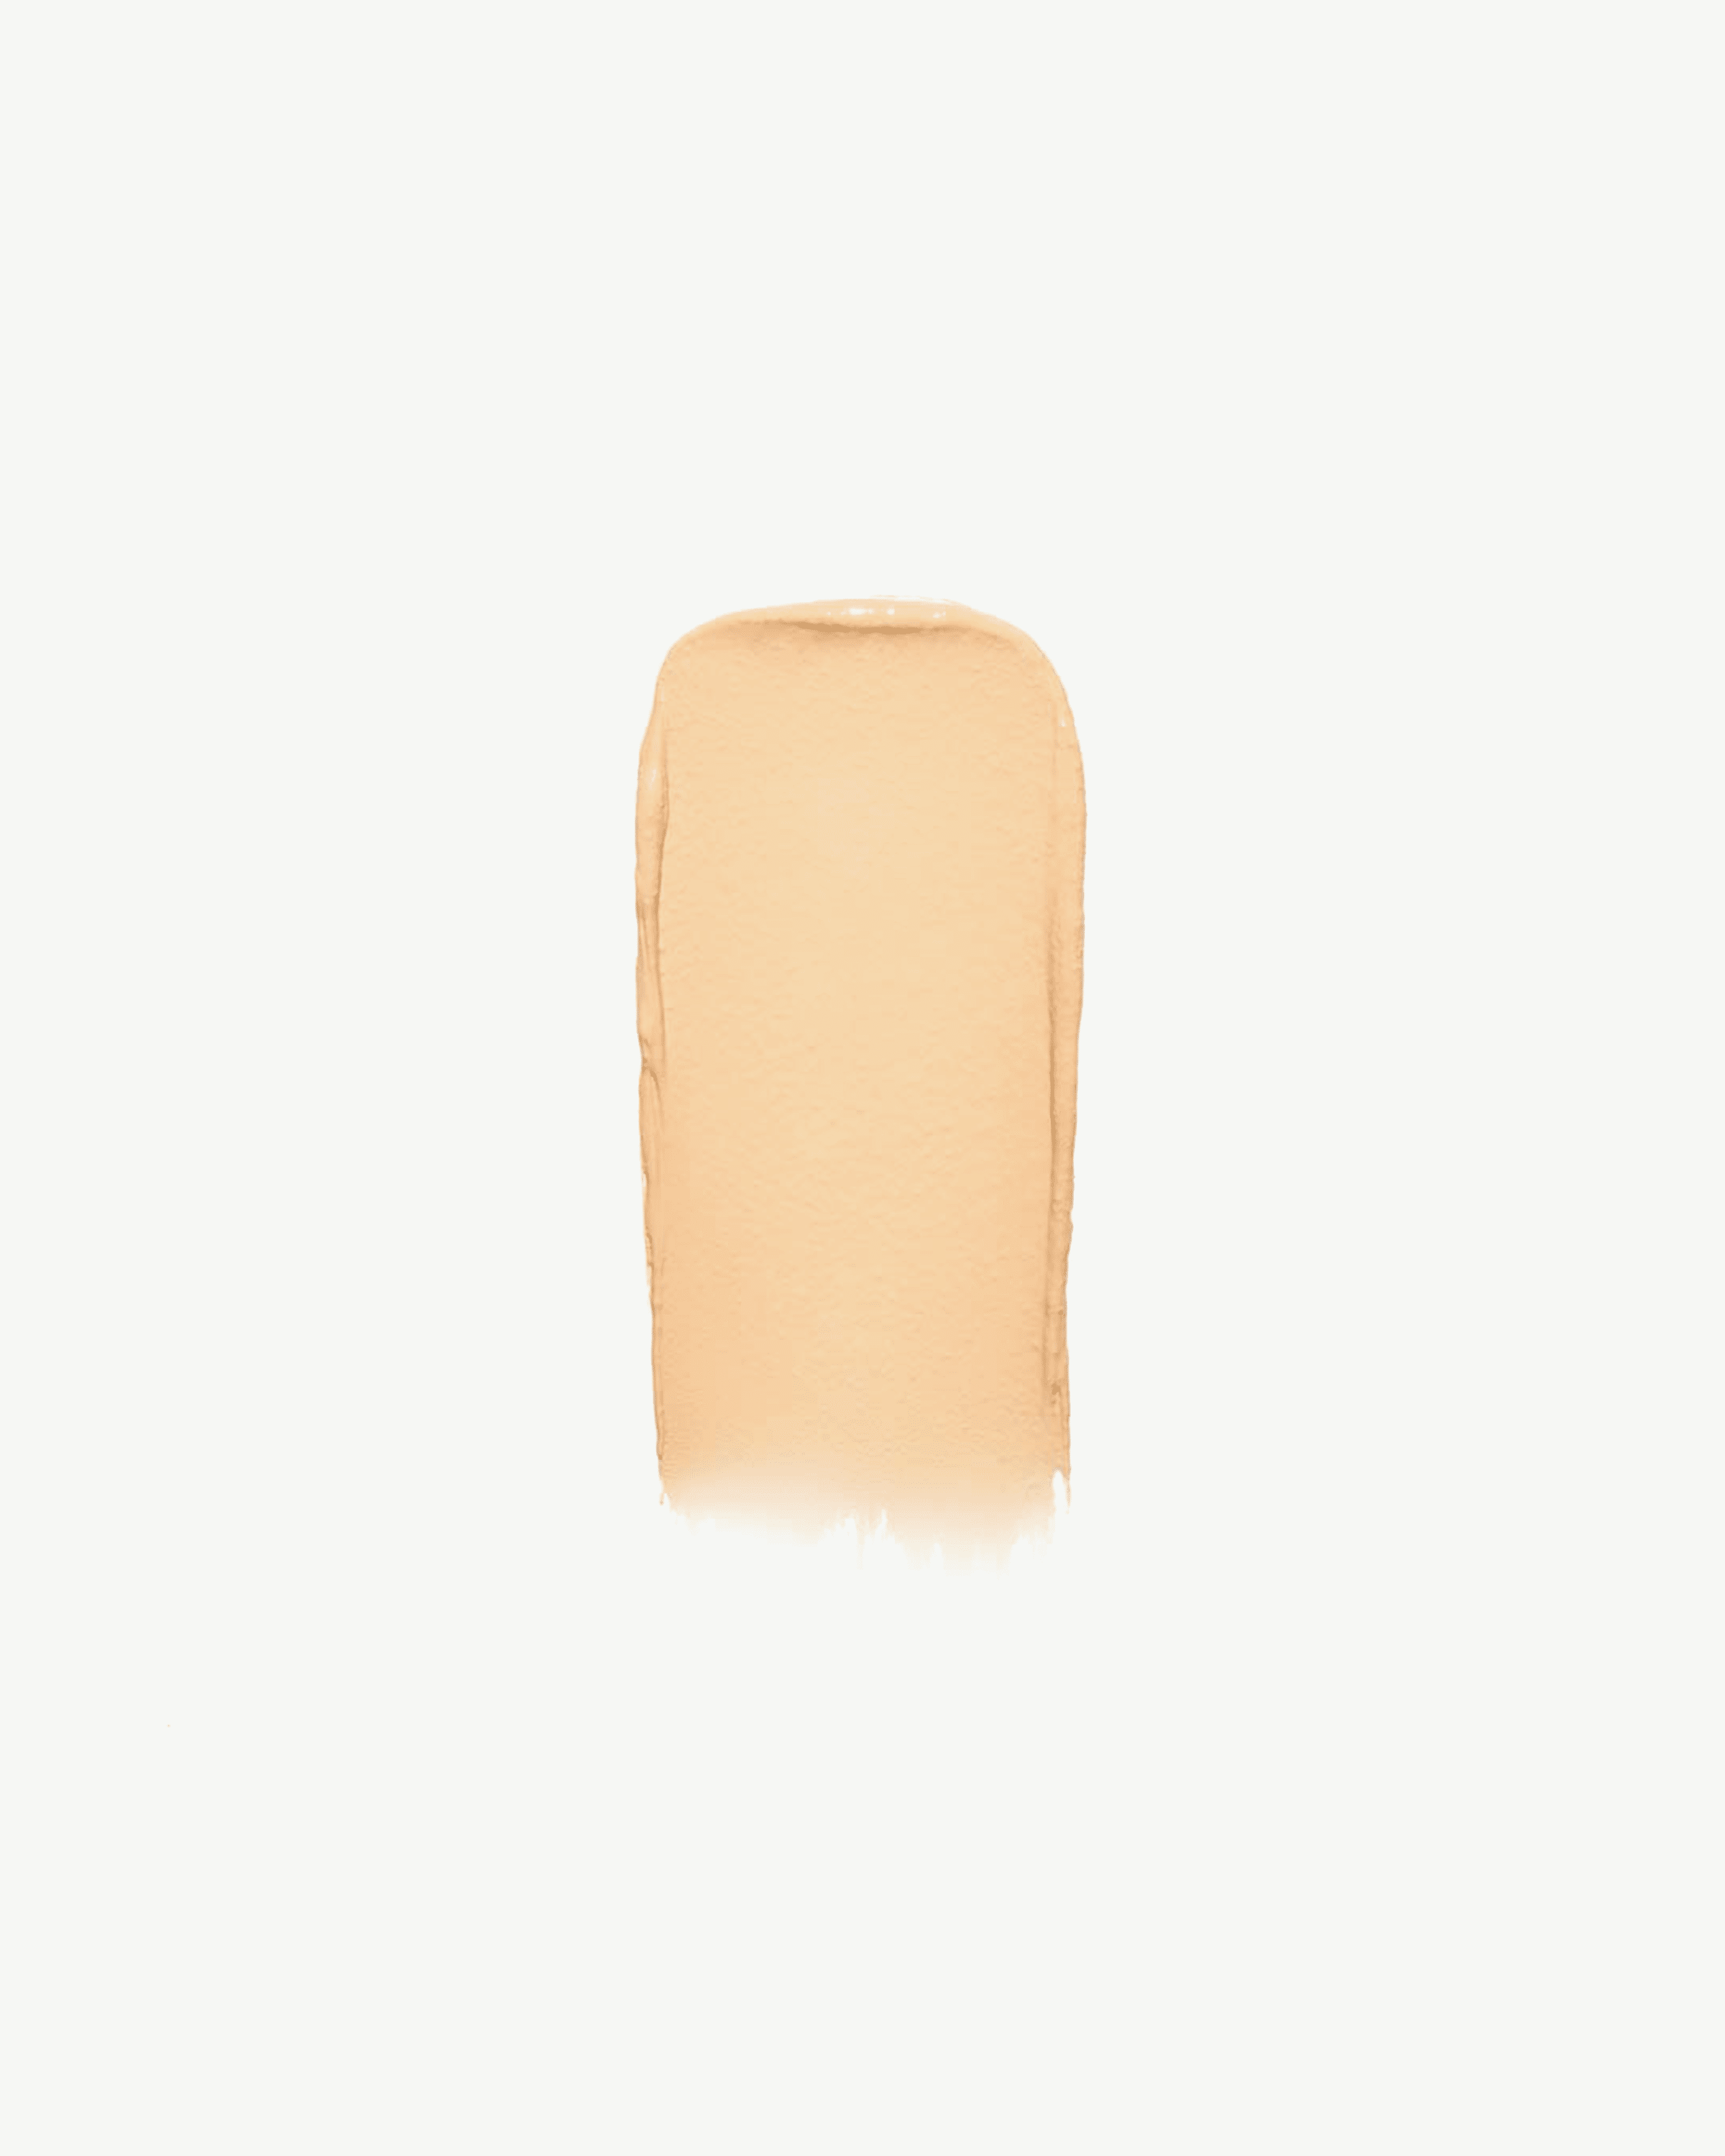 Shade 22 (for light-medium skin with yellow undertones)